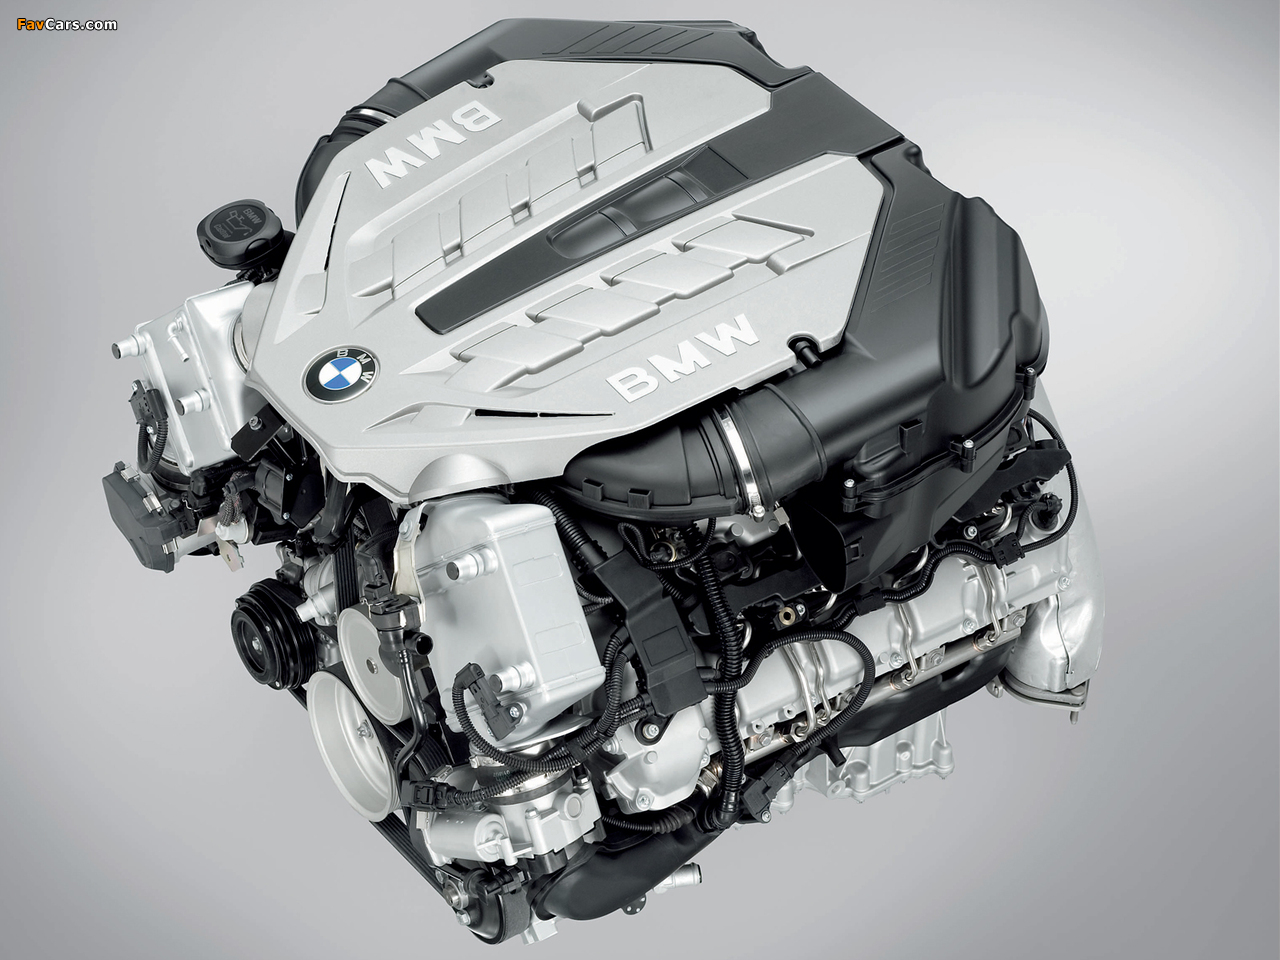 Двигатель бмв x6. BMW x6 мотор. Двигатель BMW x6m. BMW x6 3.5i, 2008 двигатель. Двигатель БМВ х6 3.0 дизель.